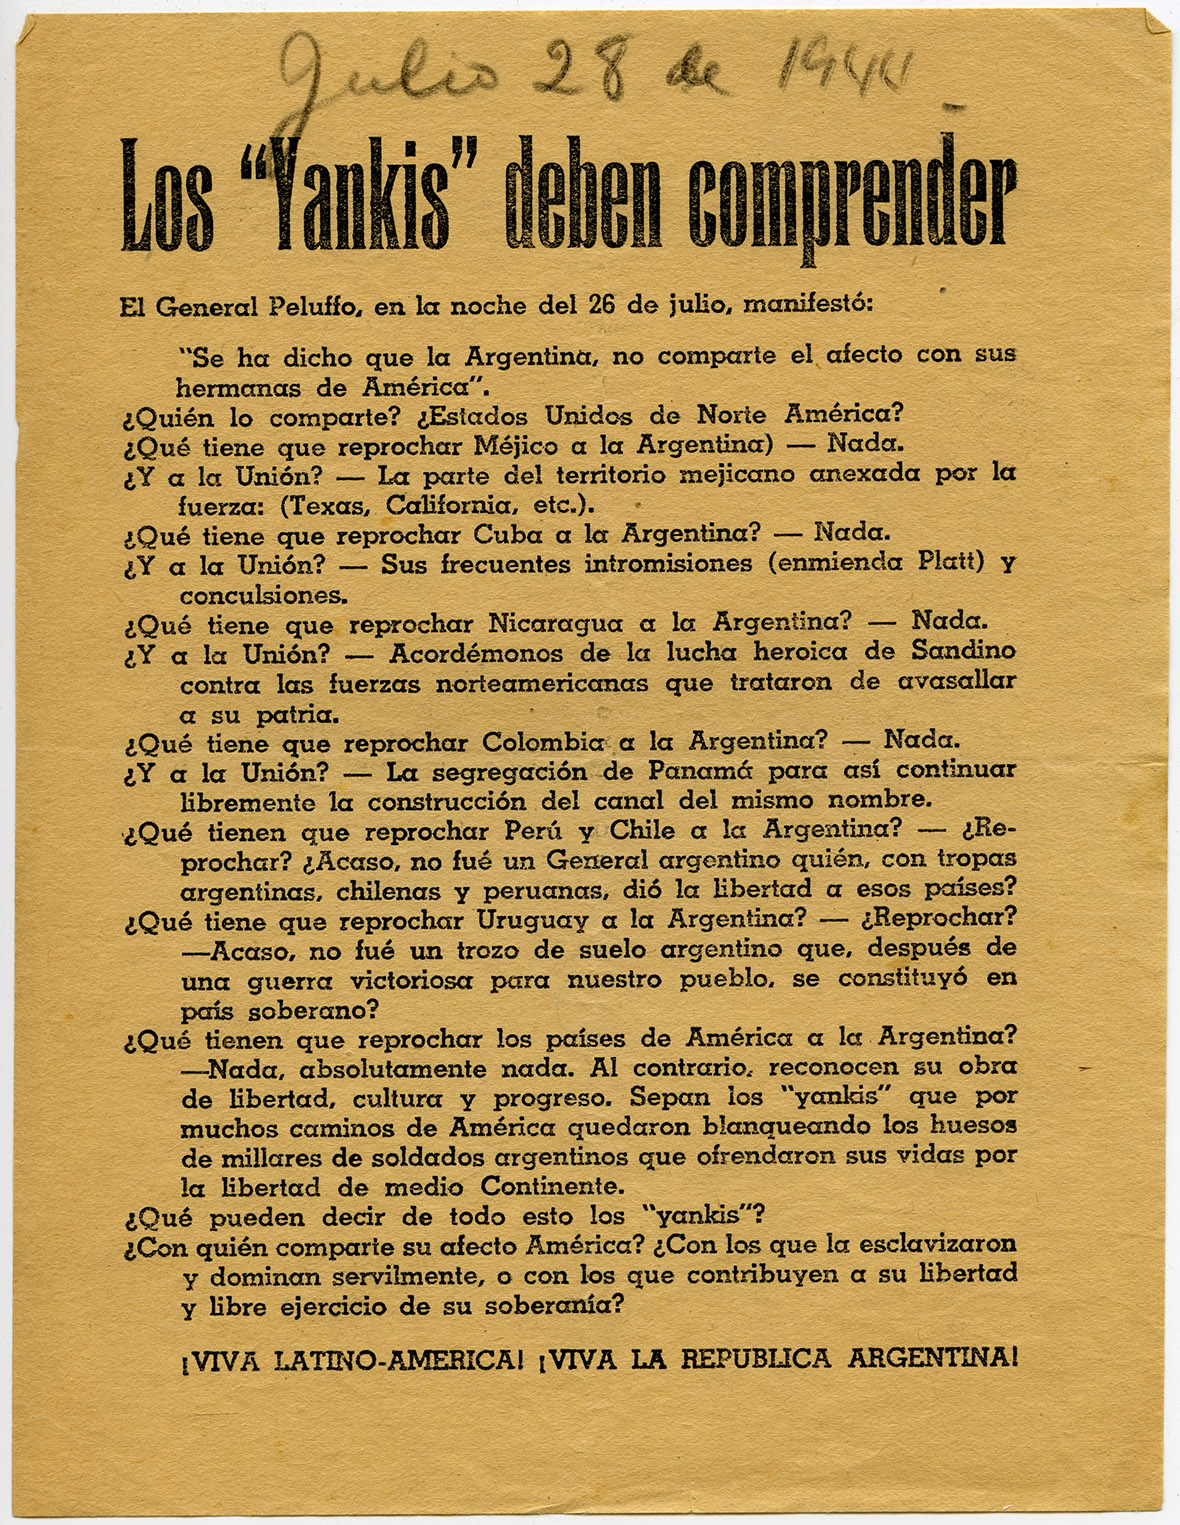 
An image of: Anti-American handbill, 1944